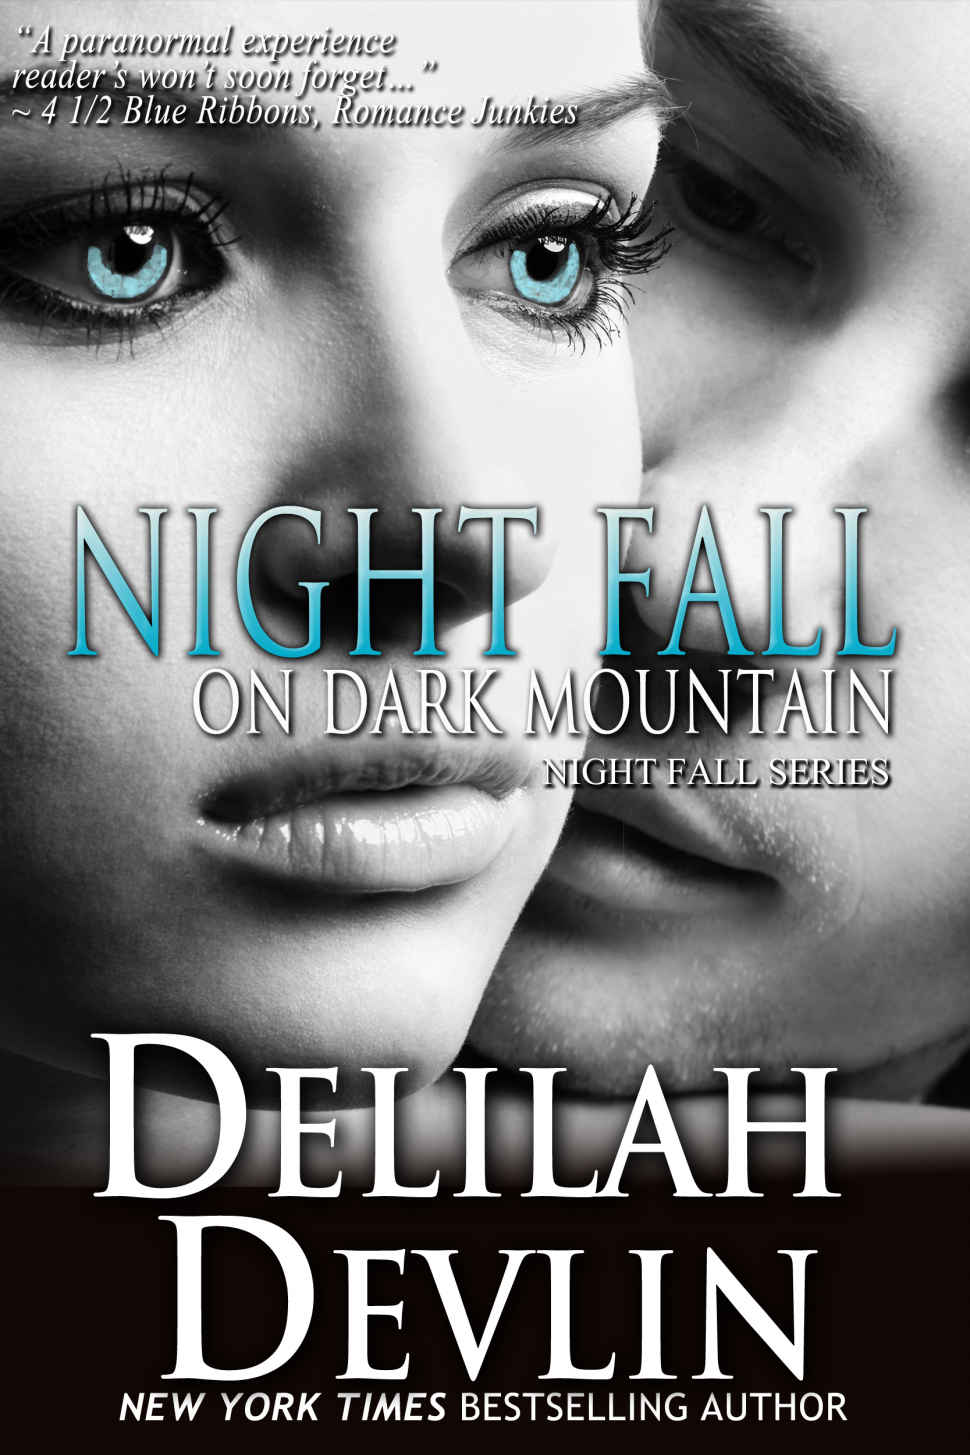 Night Fall on Dark Mountain by Delilah Devlin